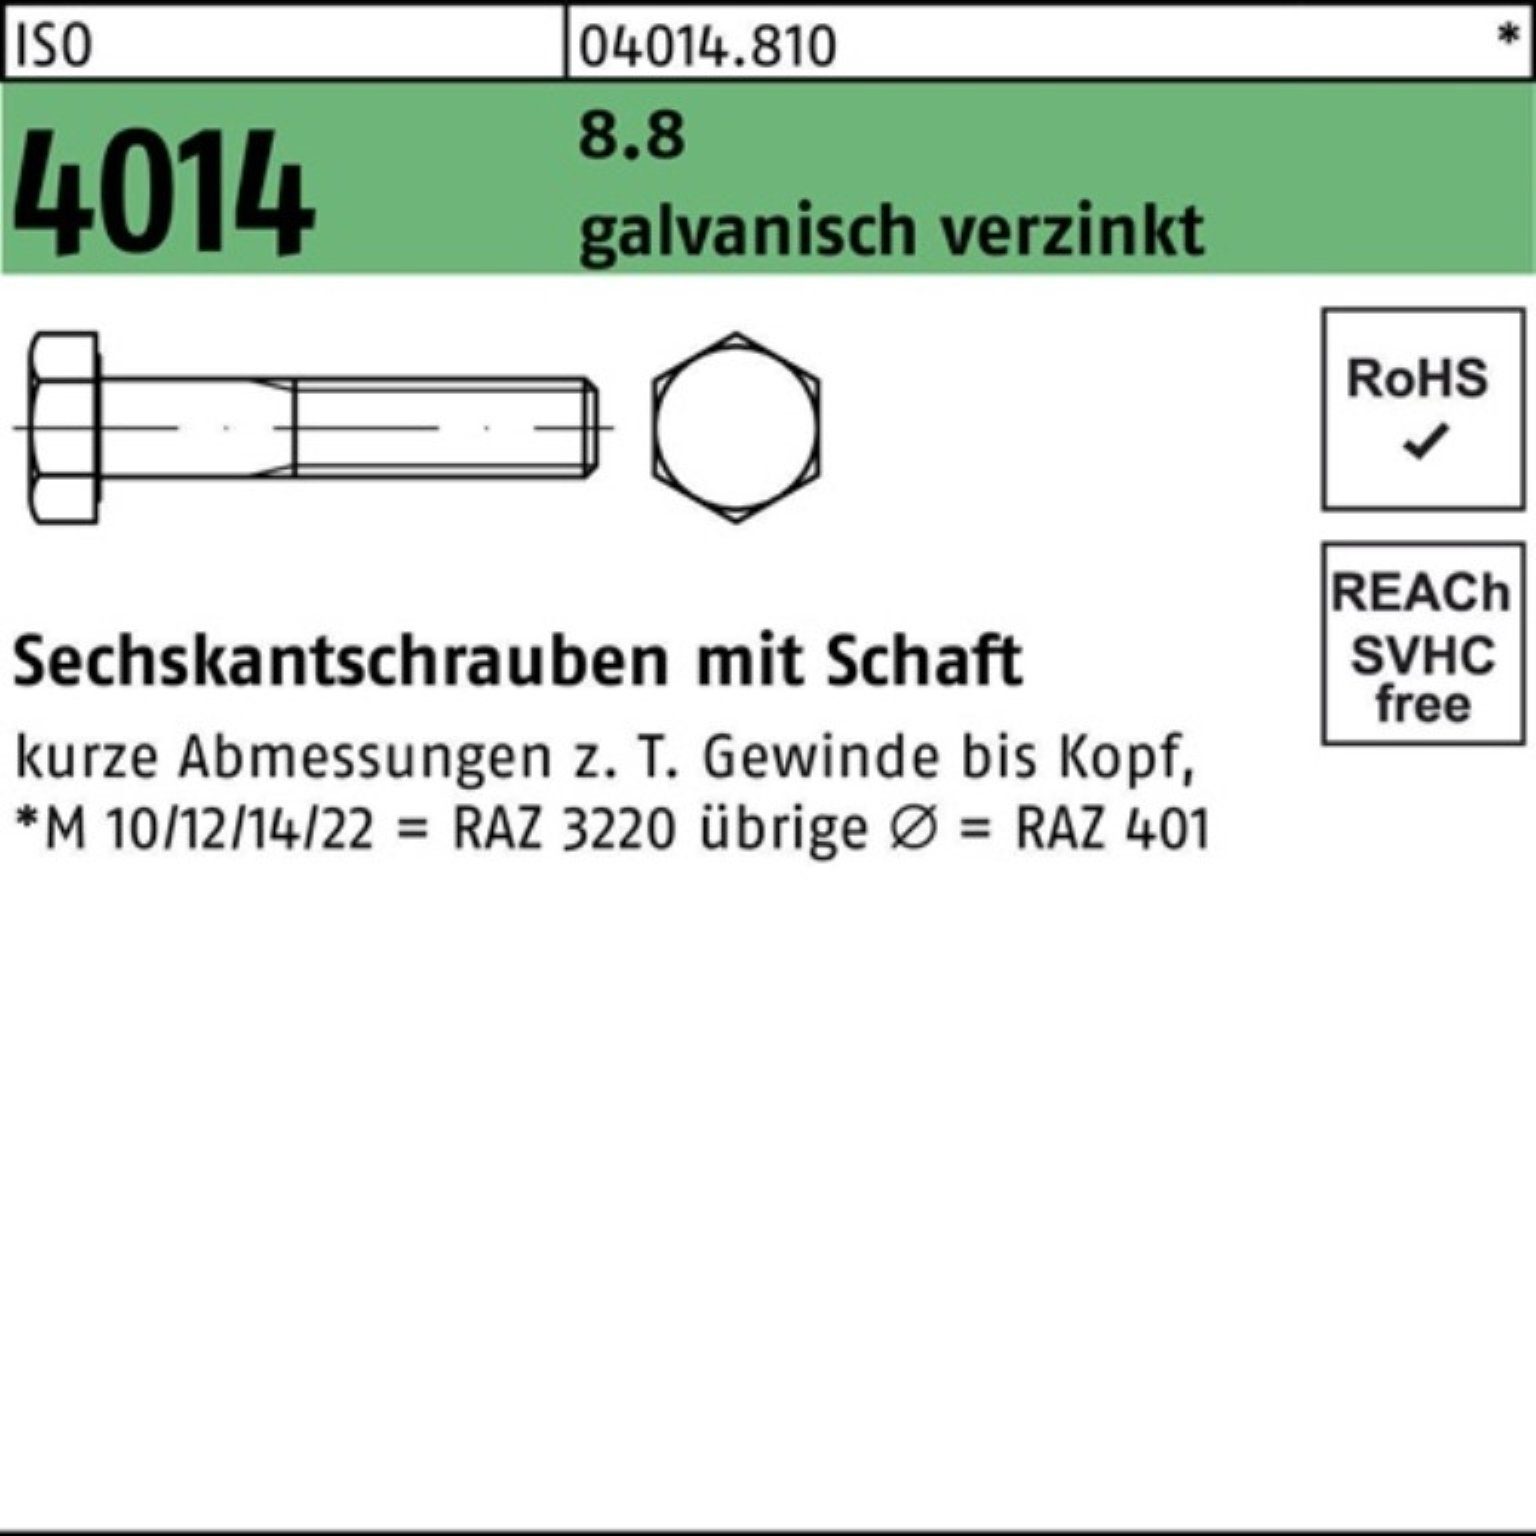 Bufab Sechskantschraube 100er Pack Sechskantschraube ISO 4014 Schaft M30x 110 8.8 galv.verz. 1 | Schrauben